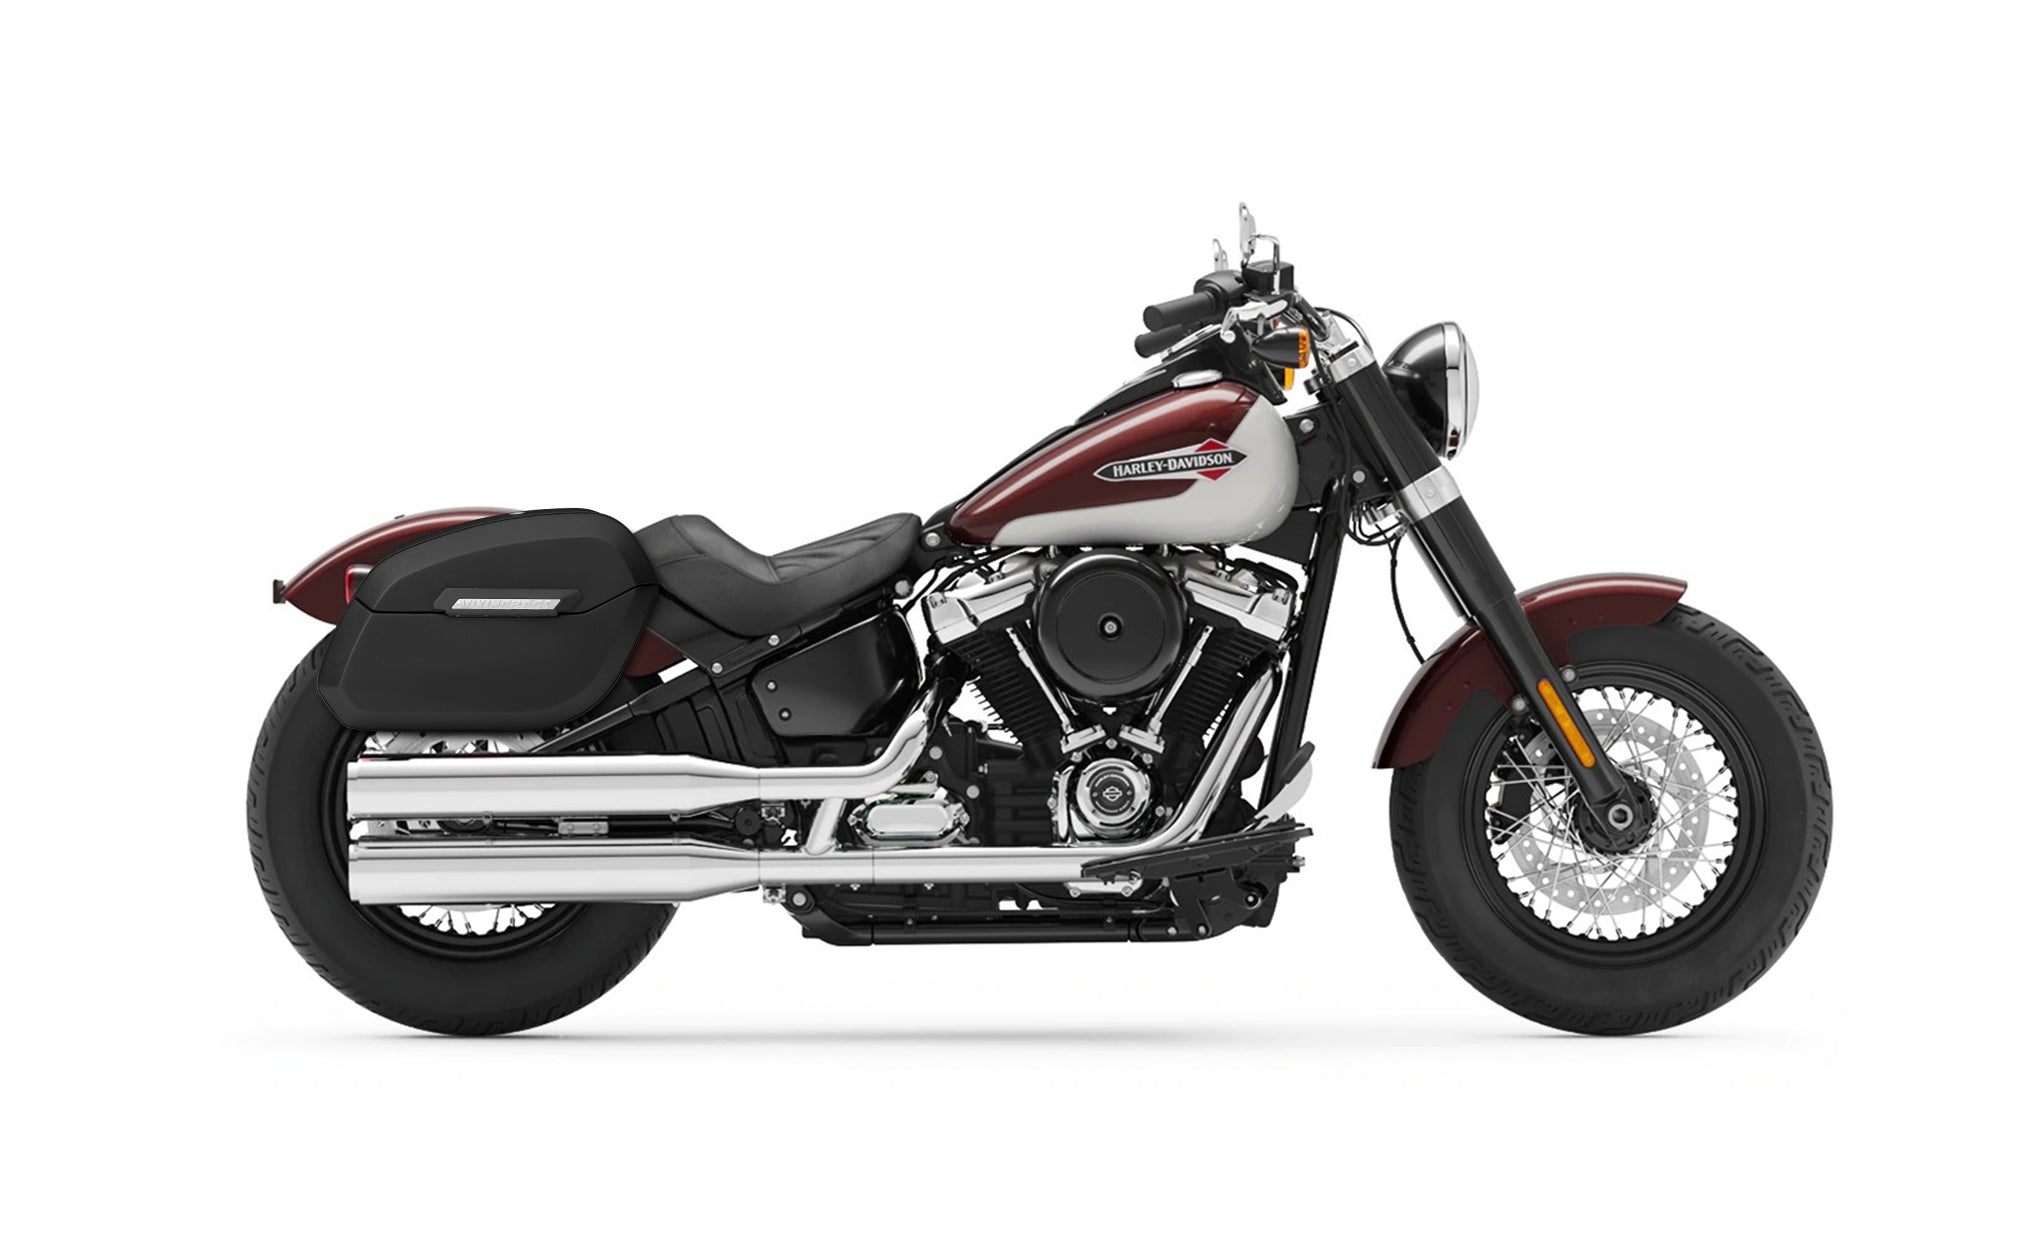 32L - Darkin Large Quick Mount Leather Wrapped Hard Saddlebags for Harley Softail Slim FLS on Bike Photo @expand